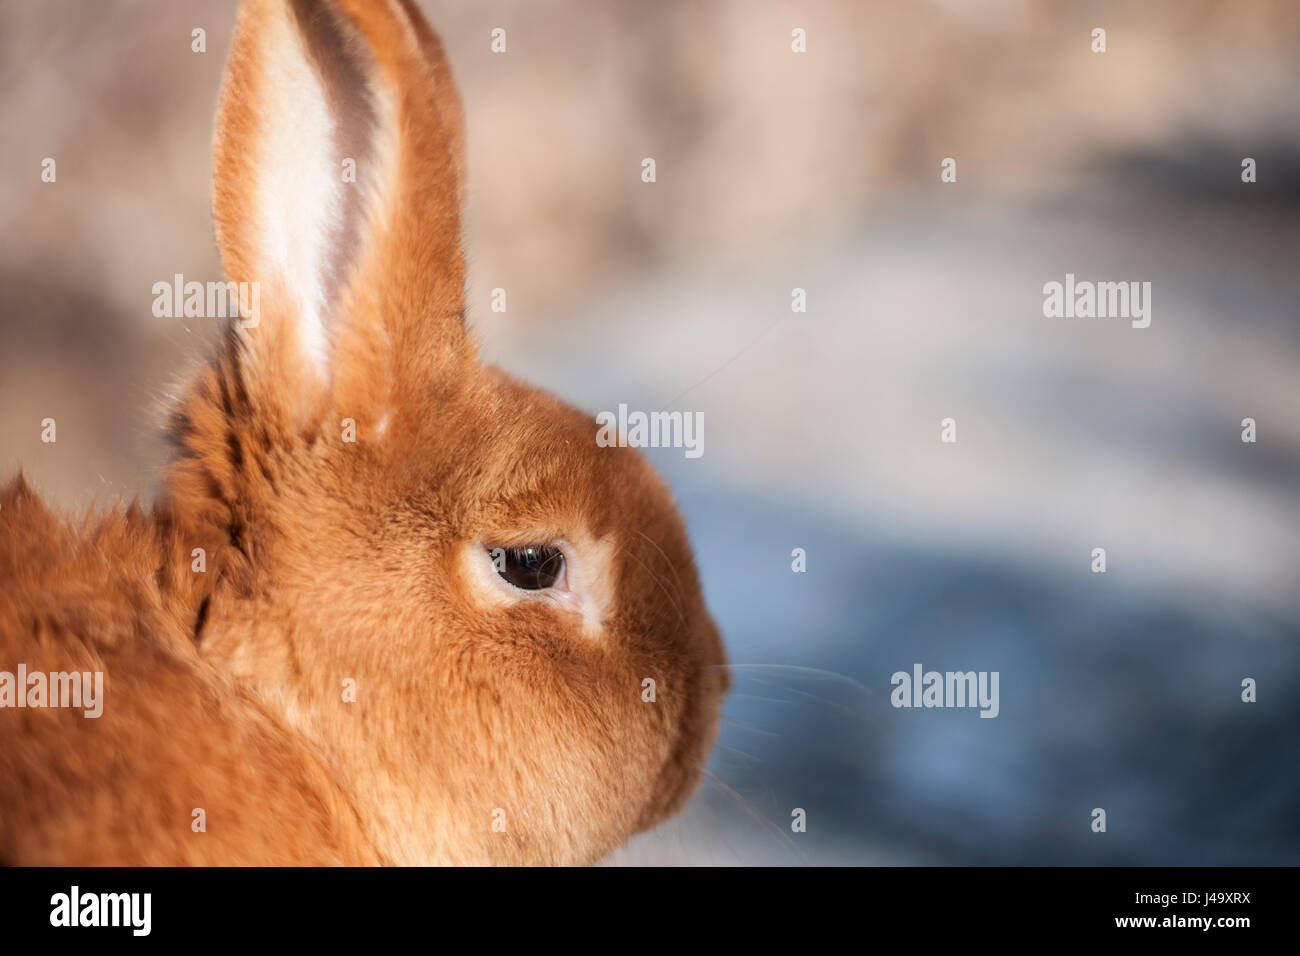 Close up image of a beautiful brown rabbit Stock Photo